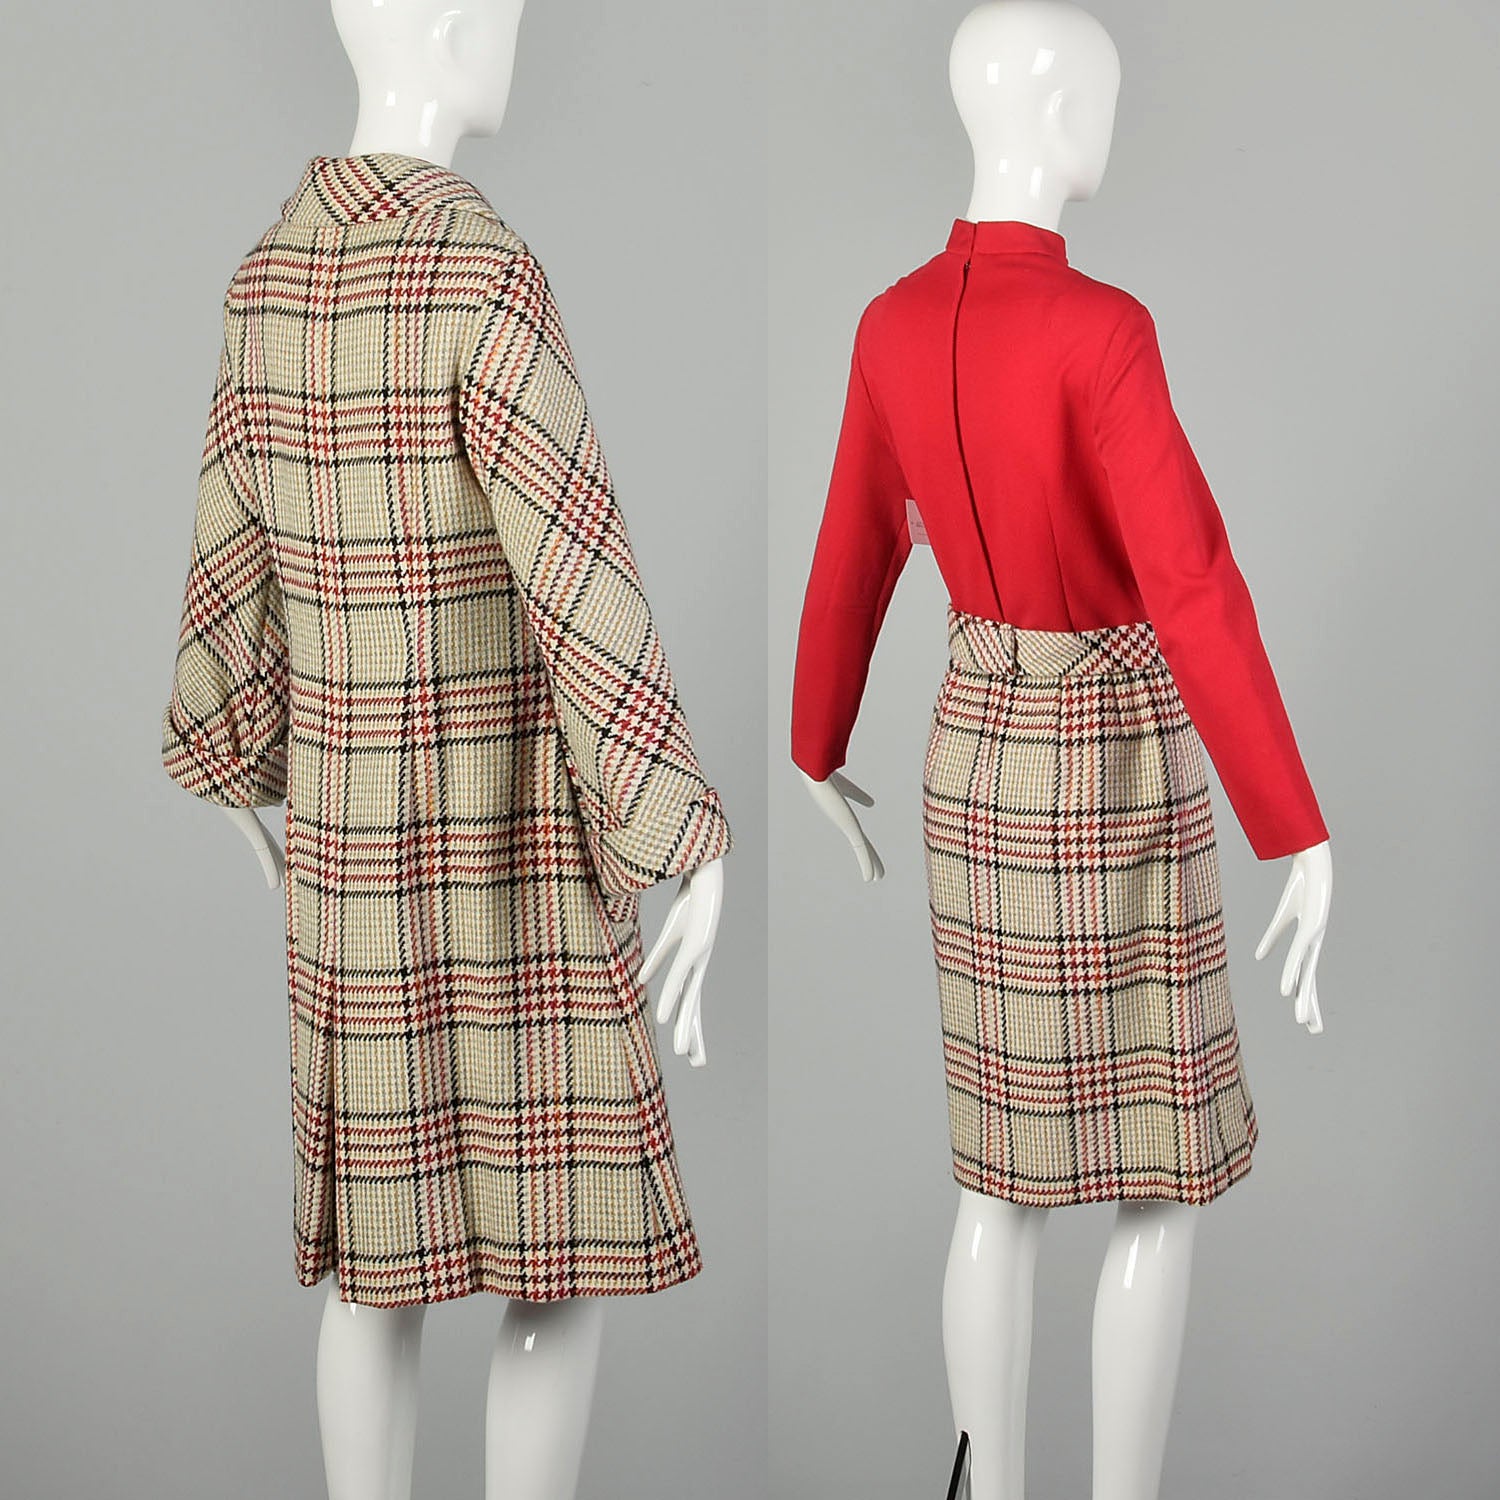 Medium 1960s Plaid Dress and Winter Coat Ensemble Long Sleeve Tweed Outfit